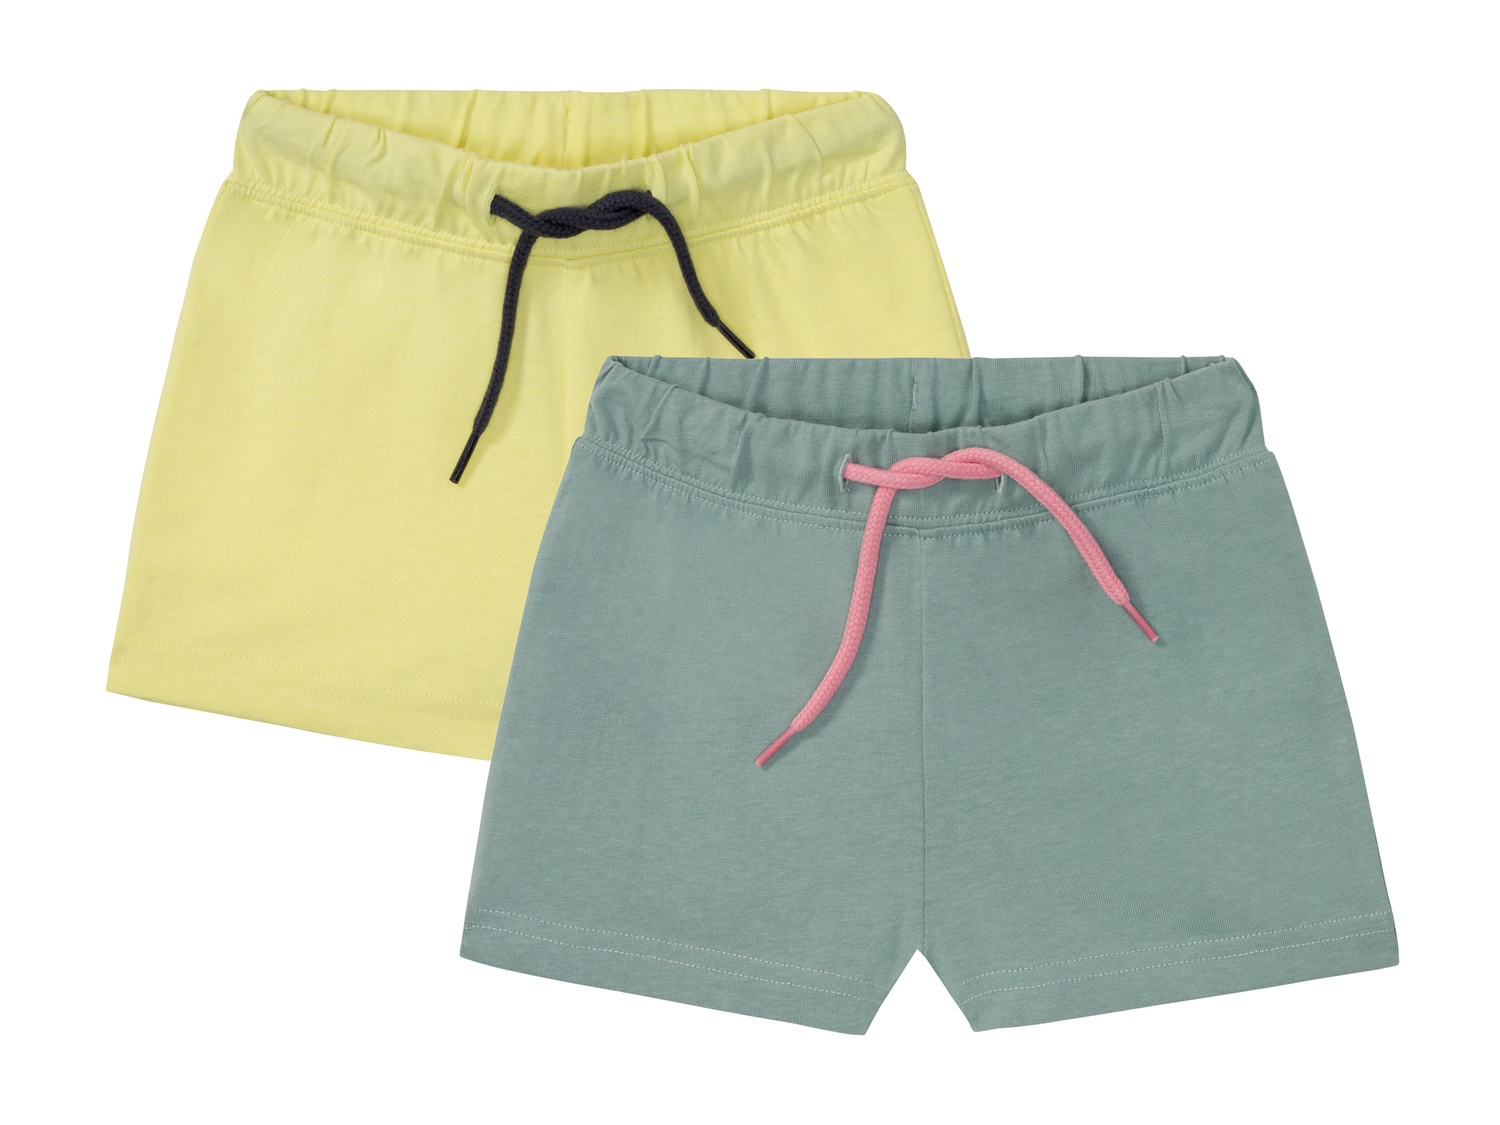 Shorts da bambina Lupilu, prezzo 4.99 &#8364; 
2 pezzi - Misure: 1-6 anni 
- ...